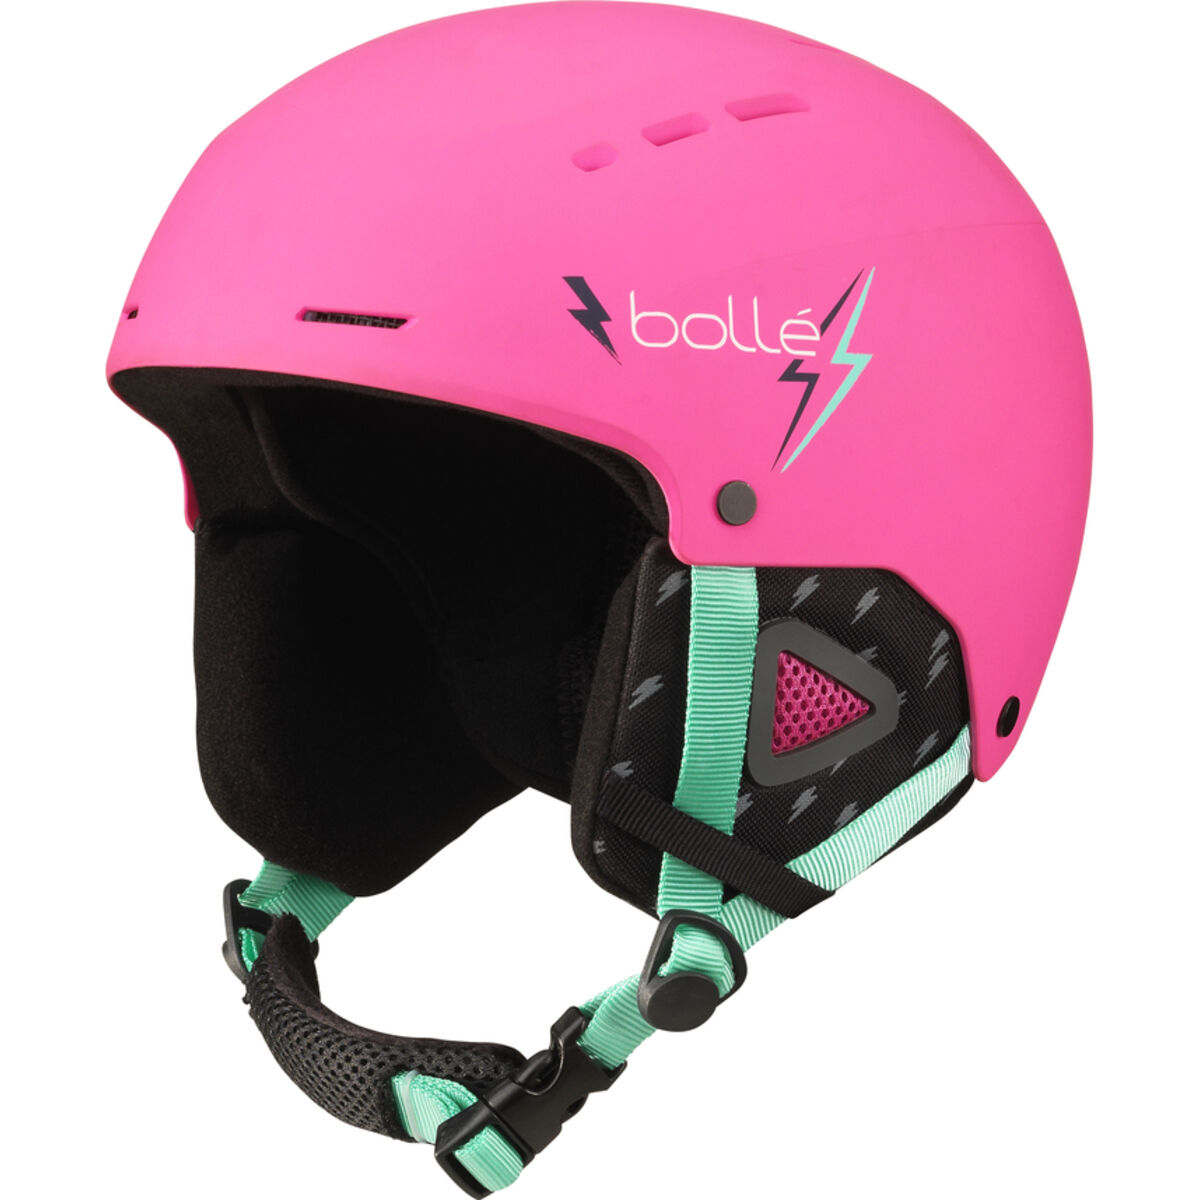 New Bolle B-Style Snow Ski Helmet Matte Black & Pink 30805 